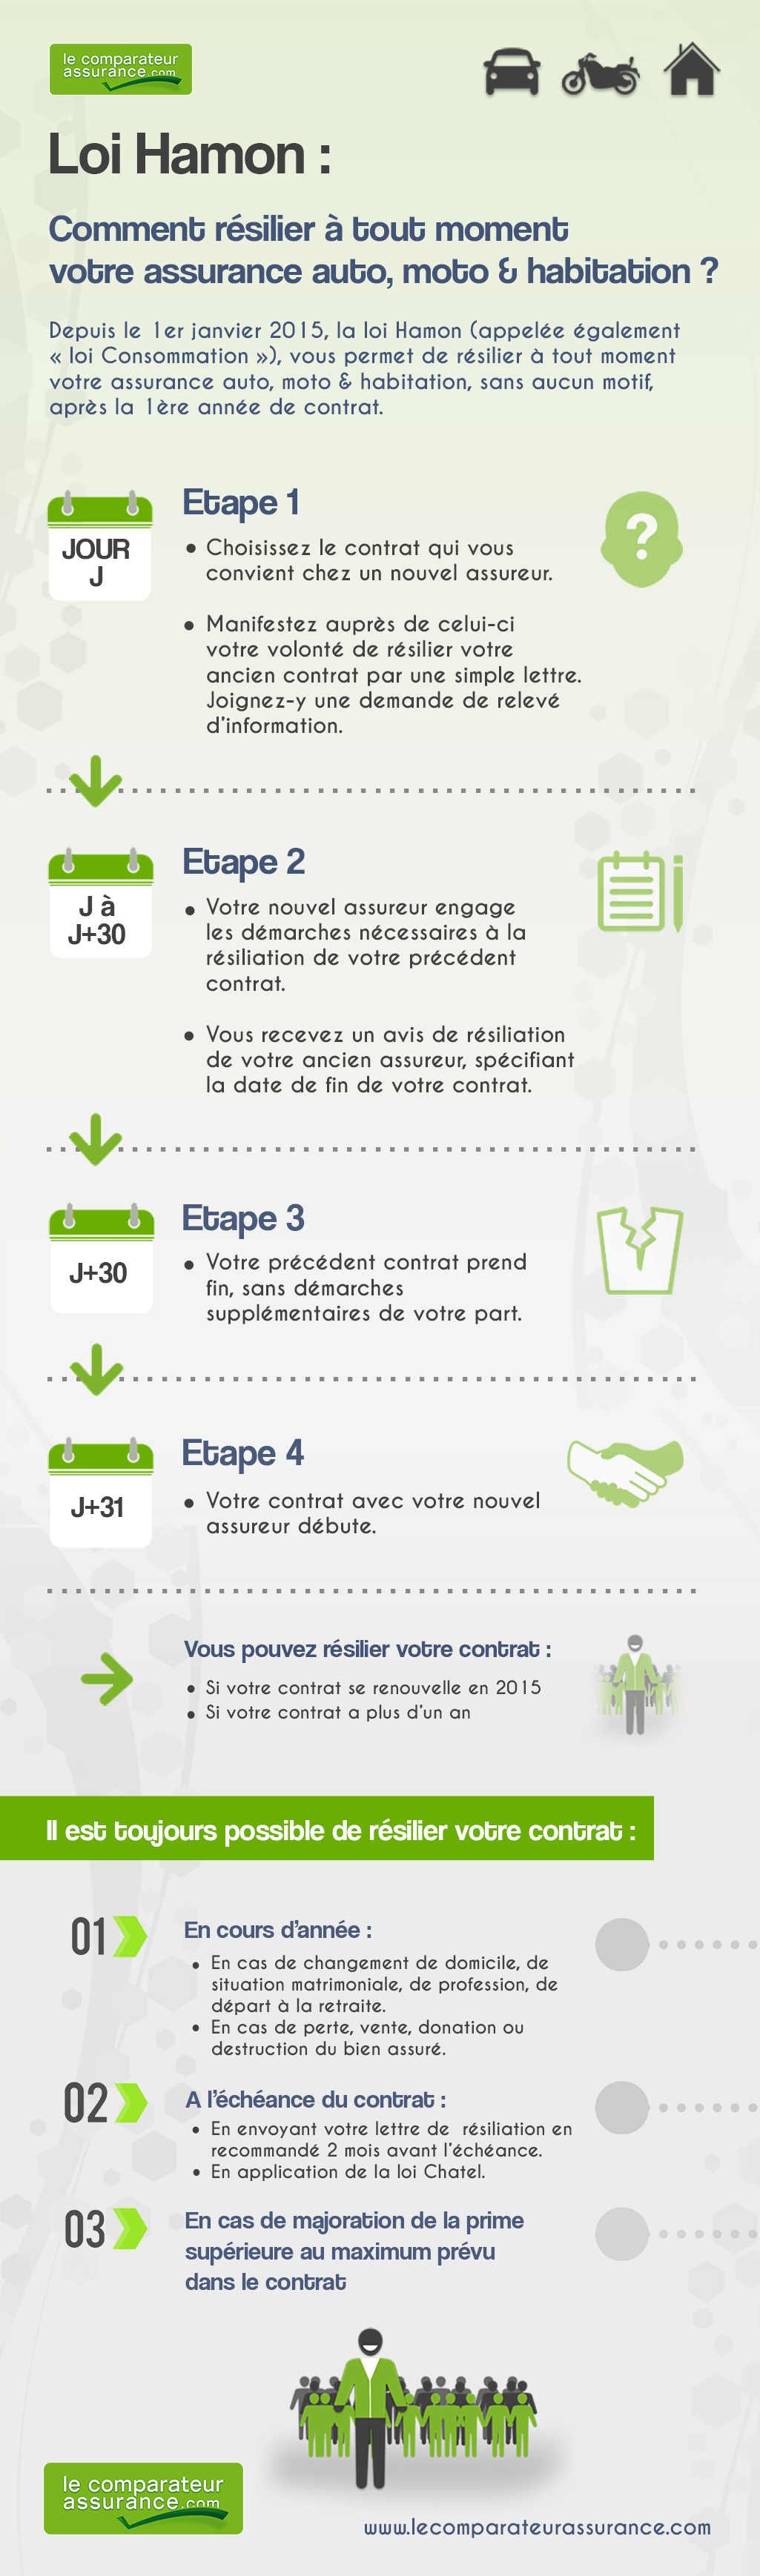 infographie-loi-hamon